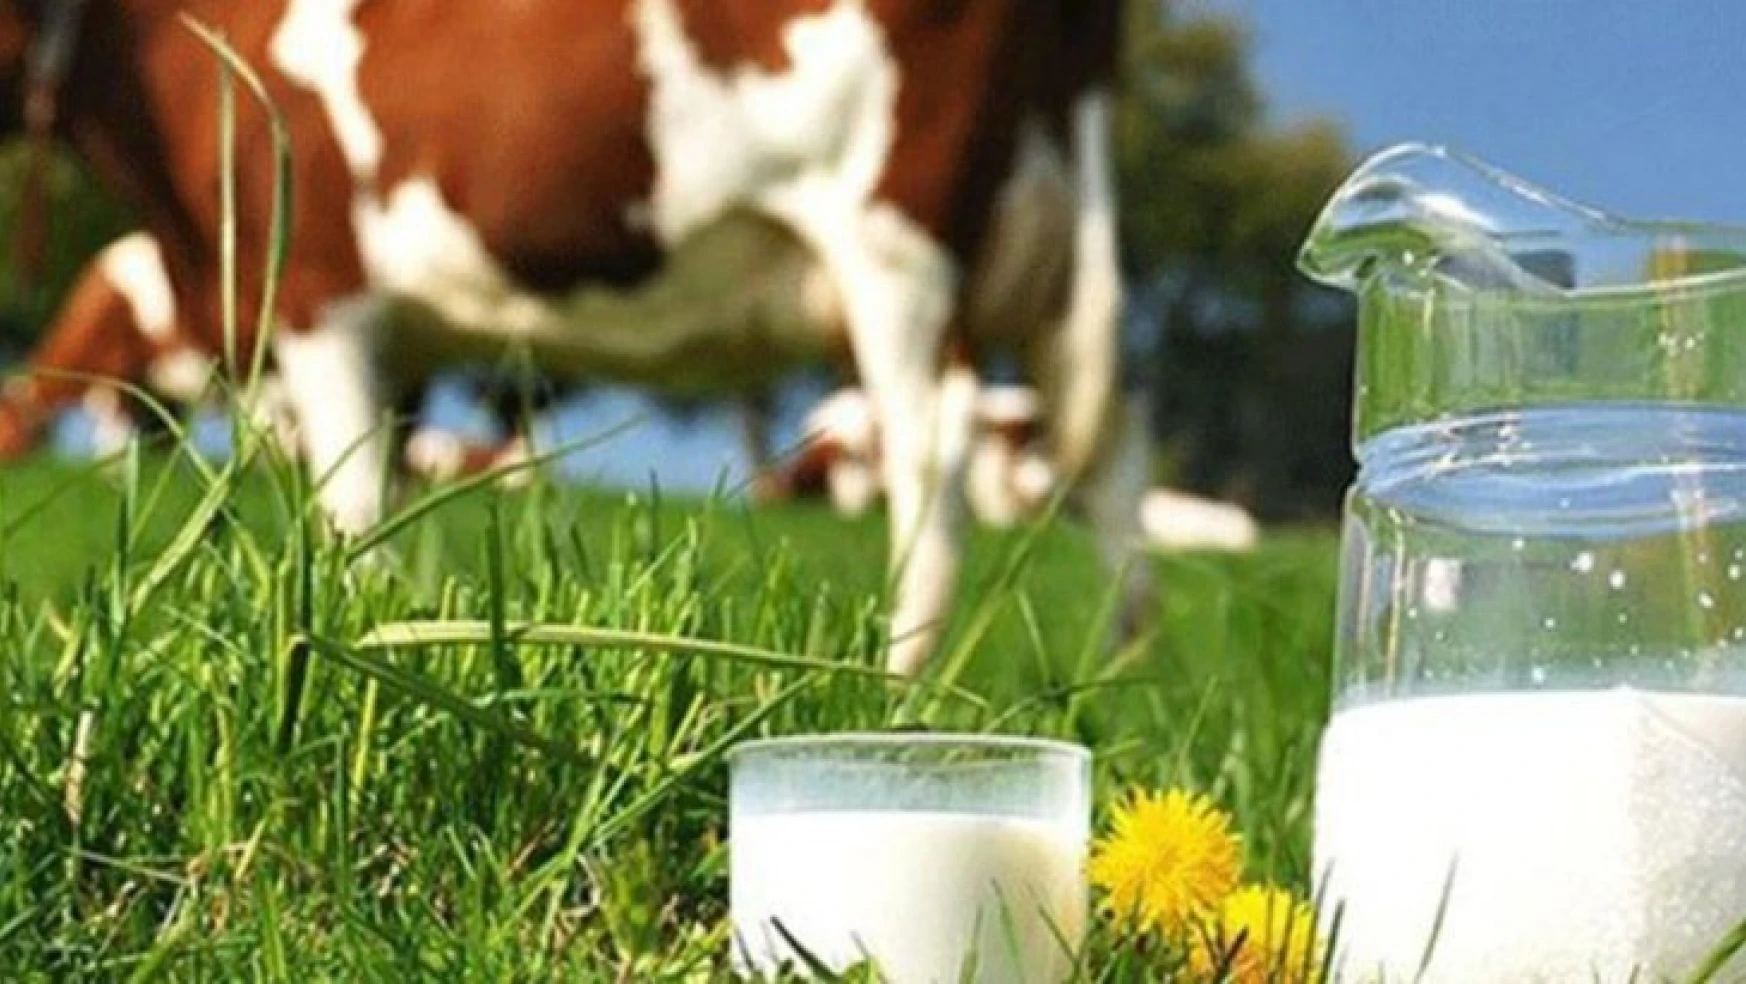 Çiğ Süt Refarans Fiyatı 2,30 Lira Oldu